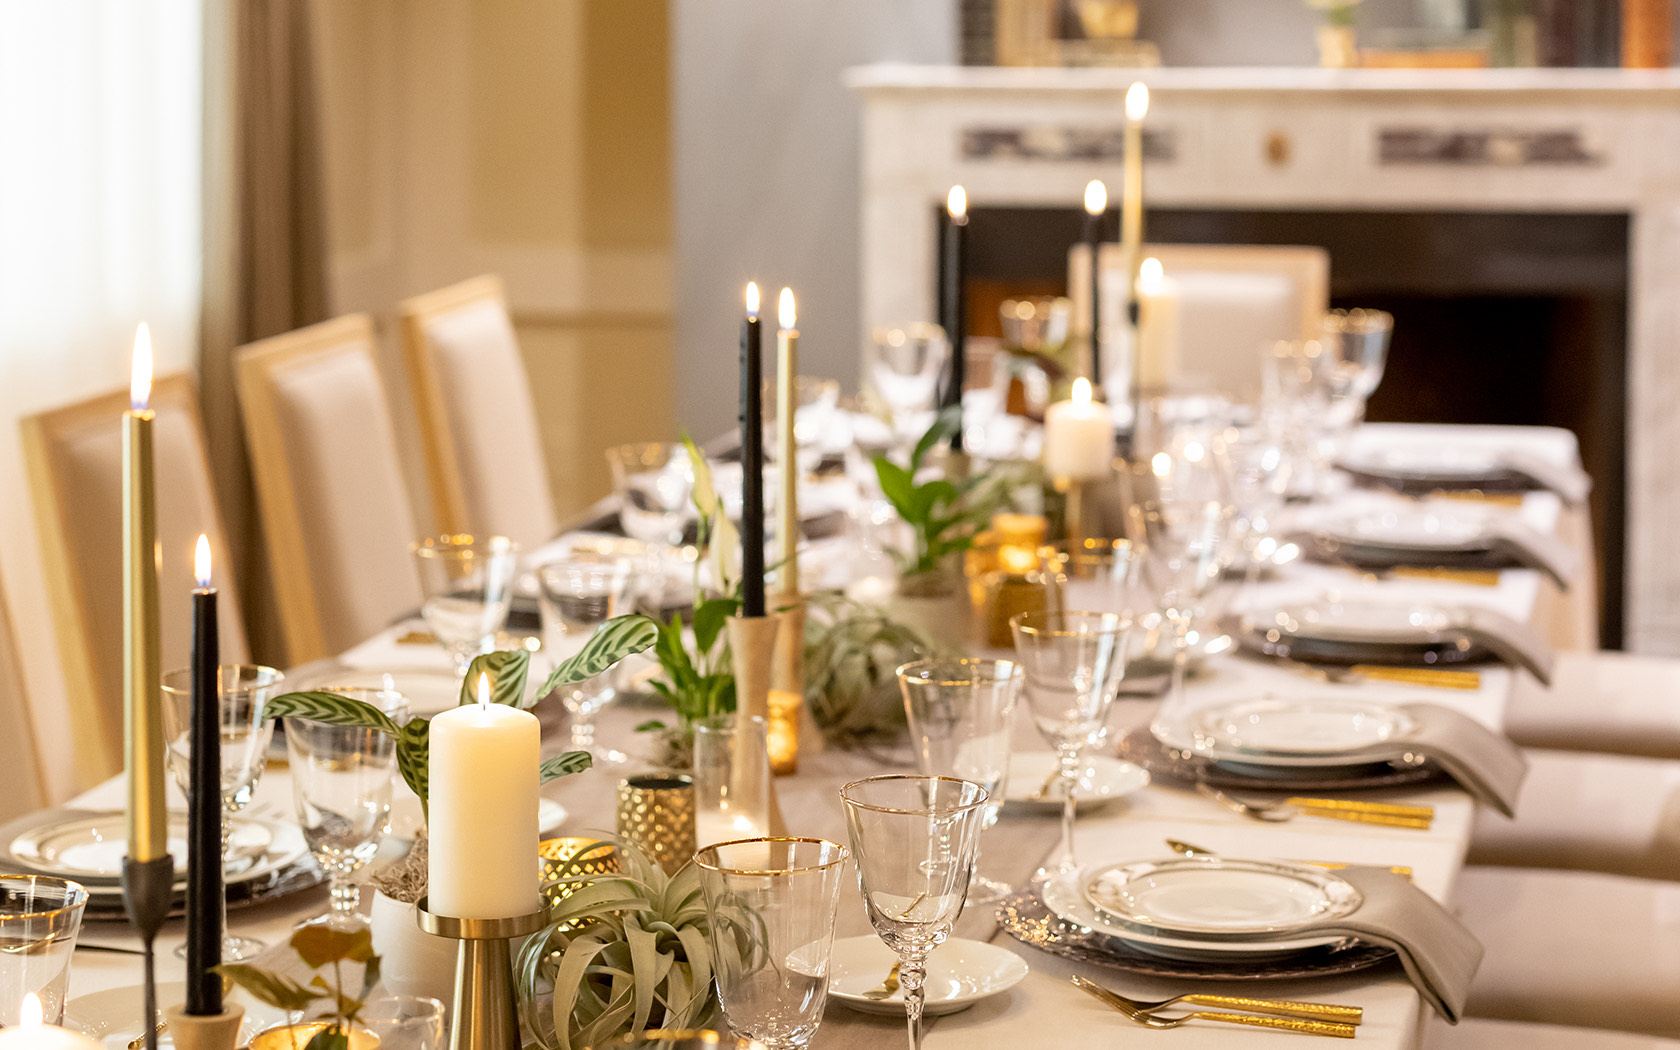 Closeup of an elegant table ready for a wedding celebration